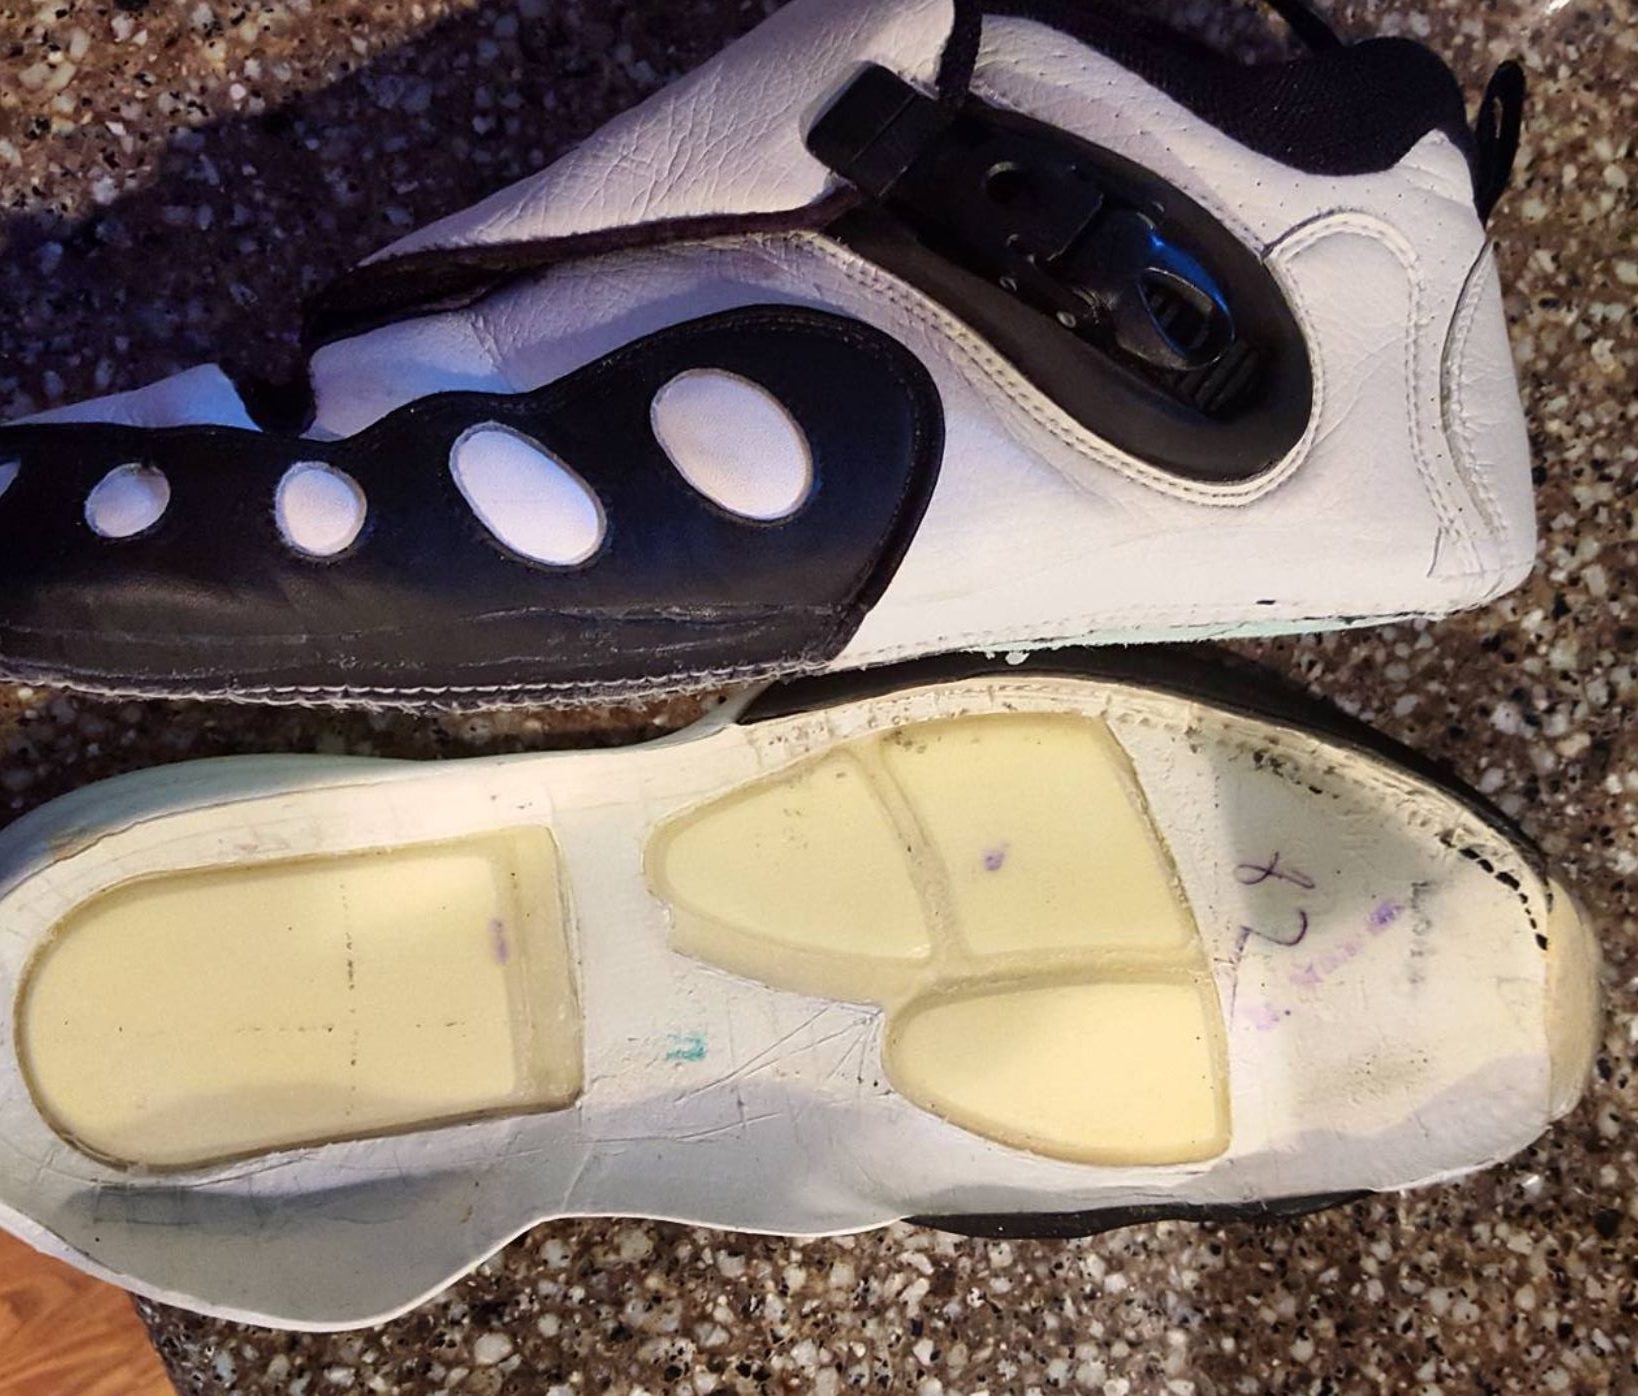 gary payton shoes 1998